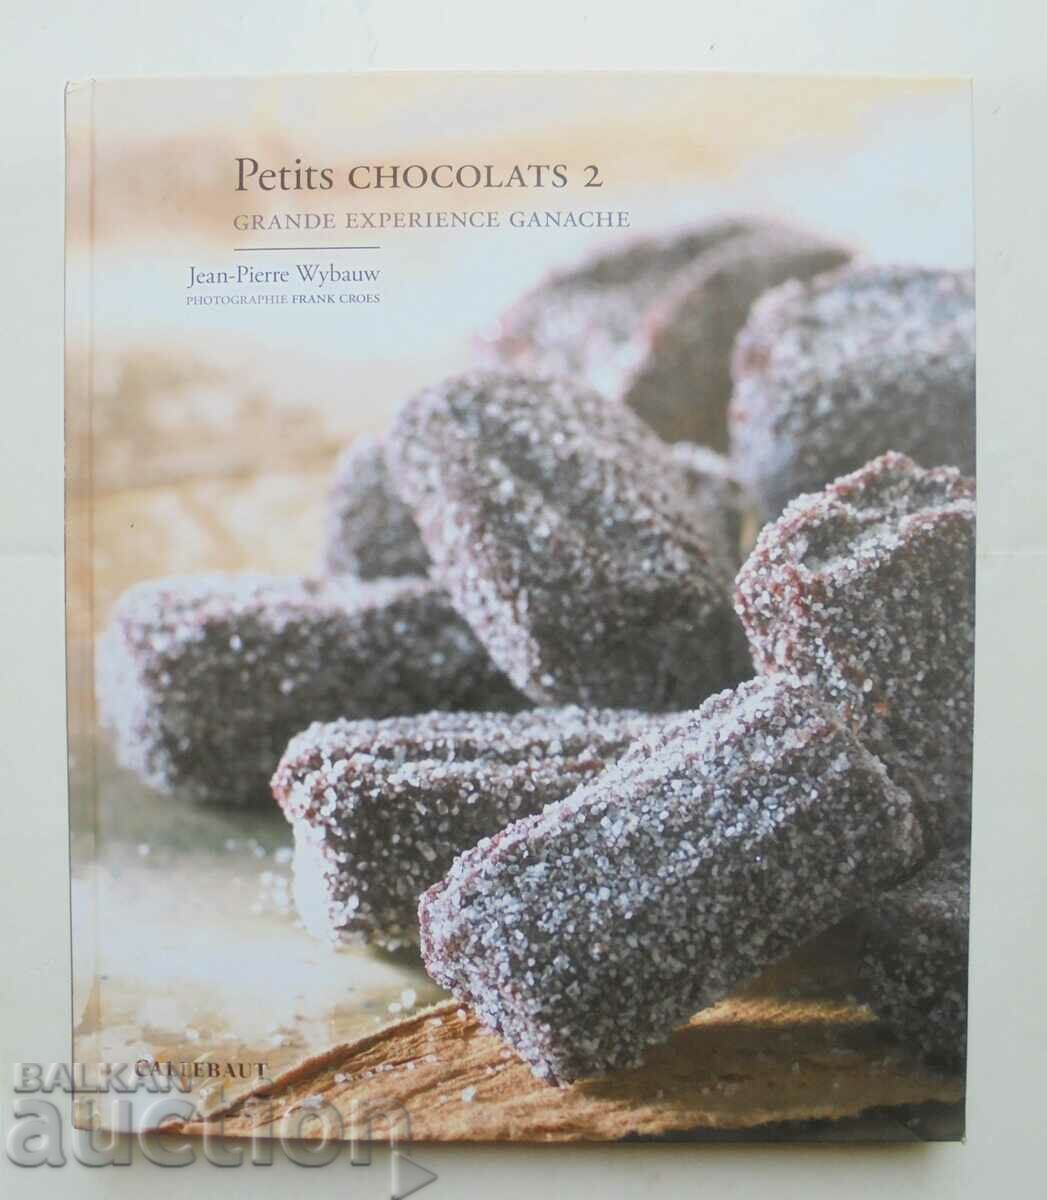 Petits chocolats 2 - Jean-Pierre Wybauw 2007 г.